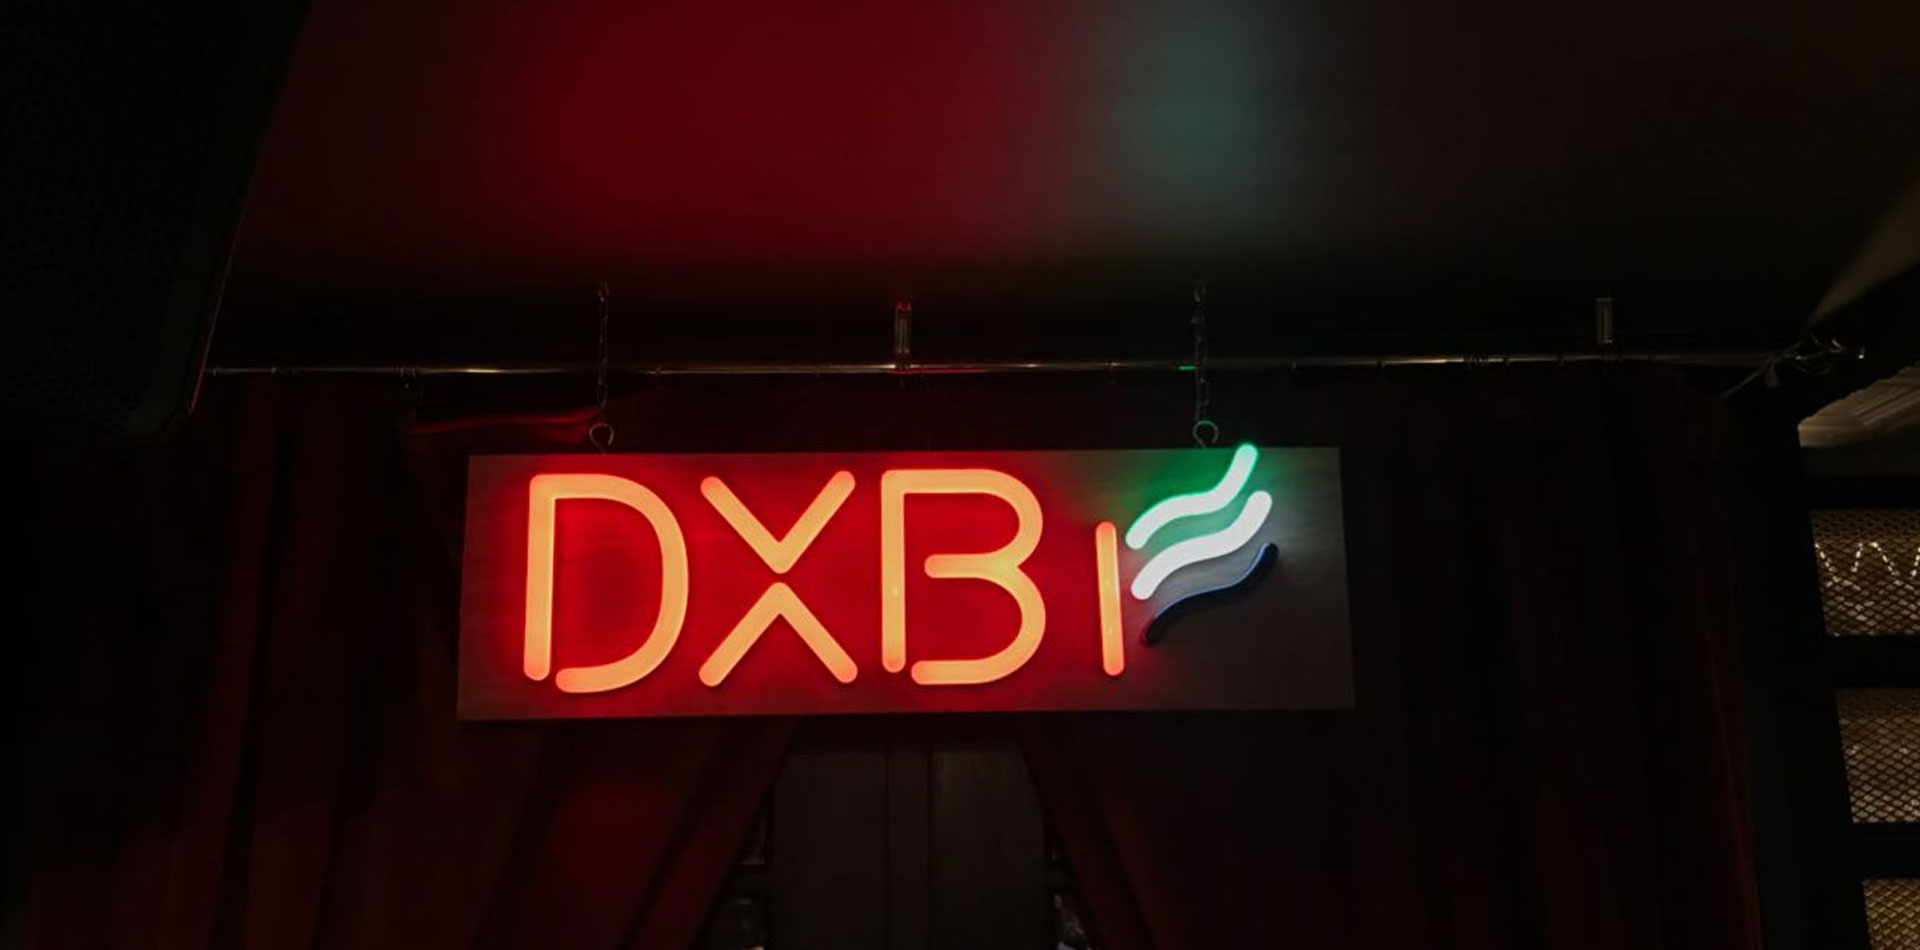 Blade Signage of DXB